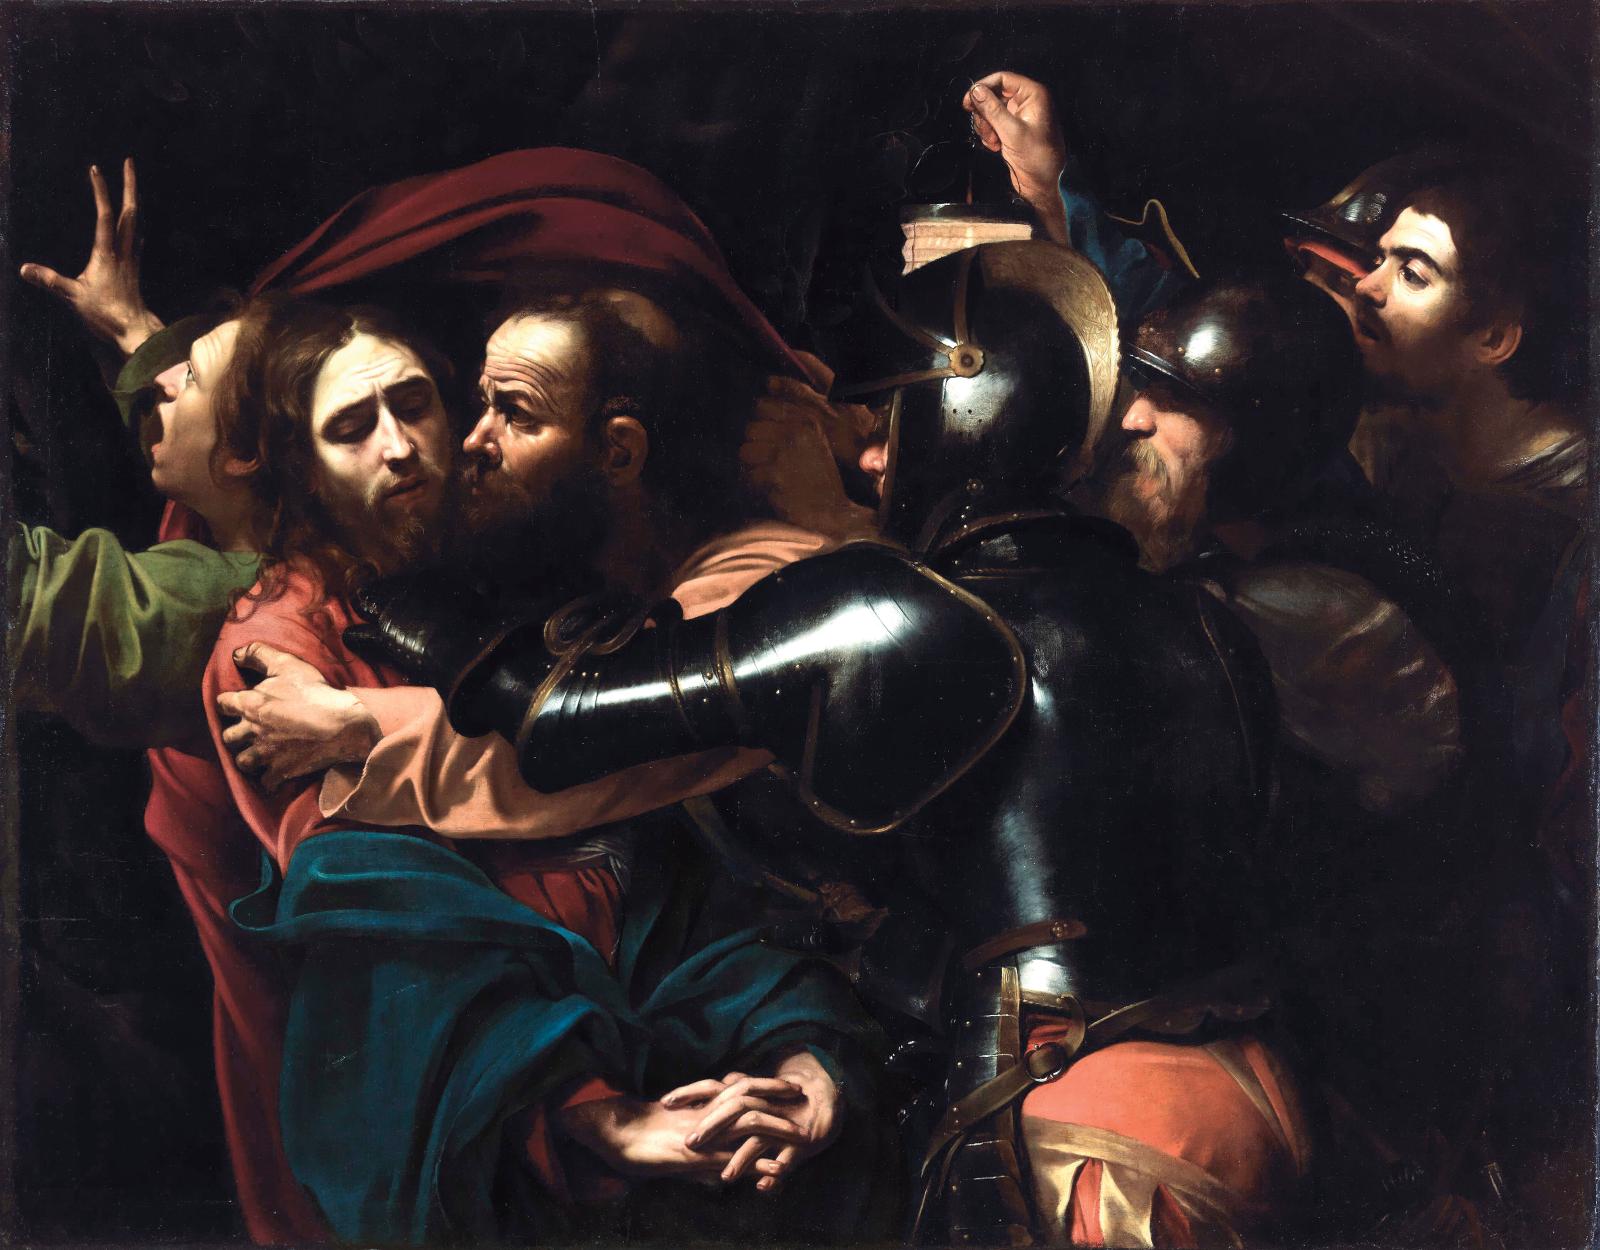 Michelangelo Merisi da Caravaggio, L’Arrestation du Christ, 1602, huile sur toile, 133,5 x 169,5 cm. © The National Gallery of Ireland, Du